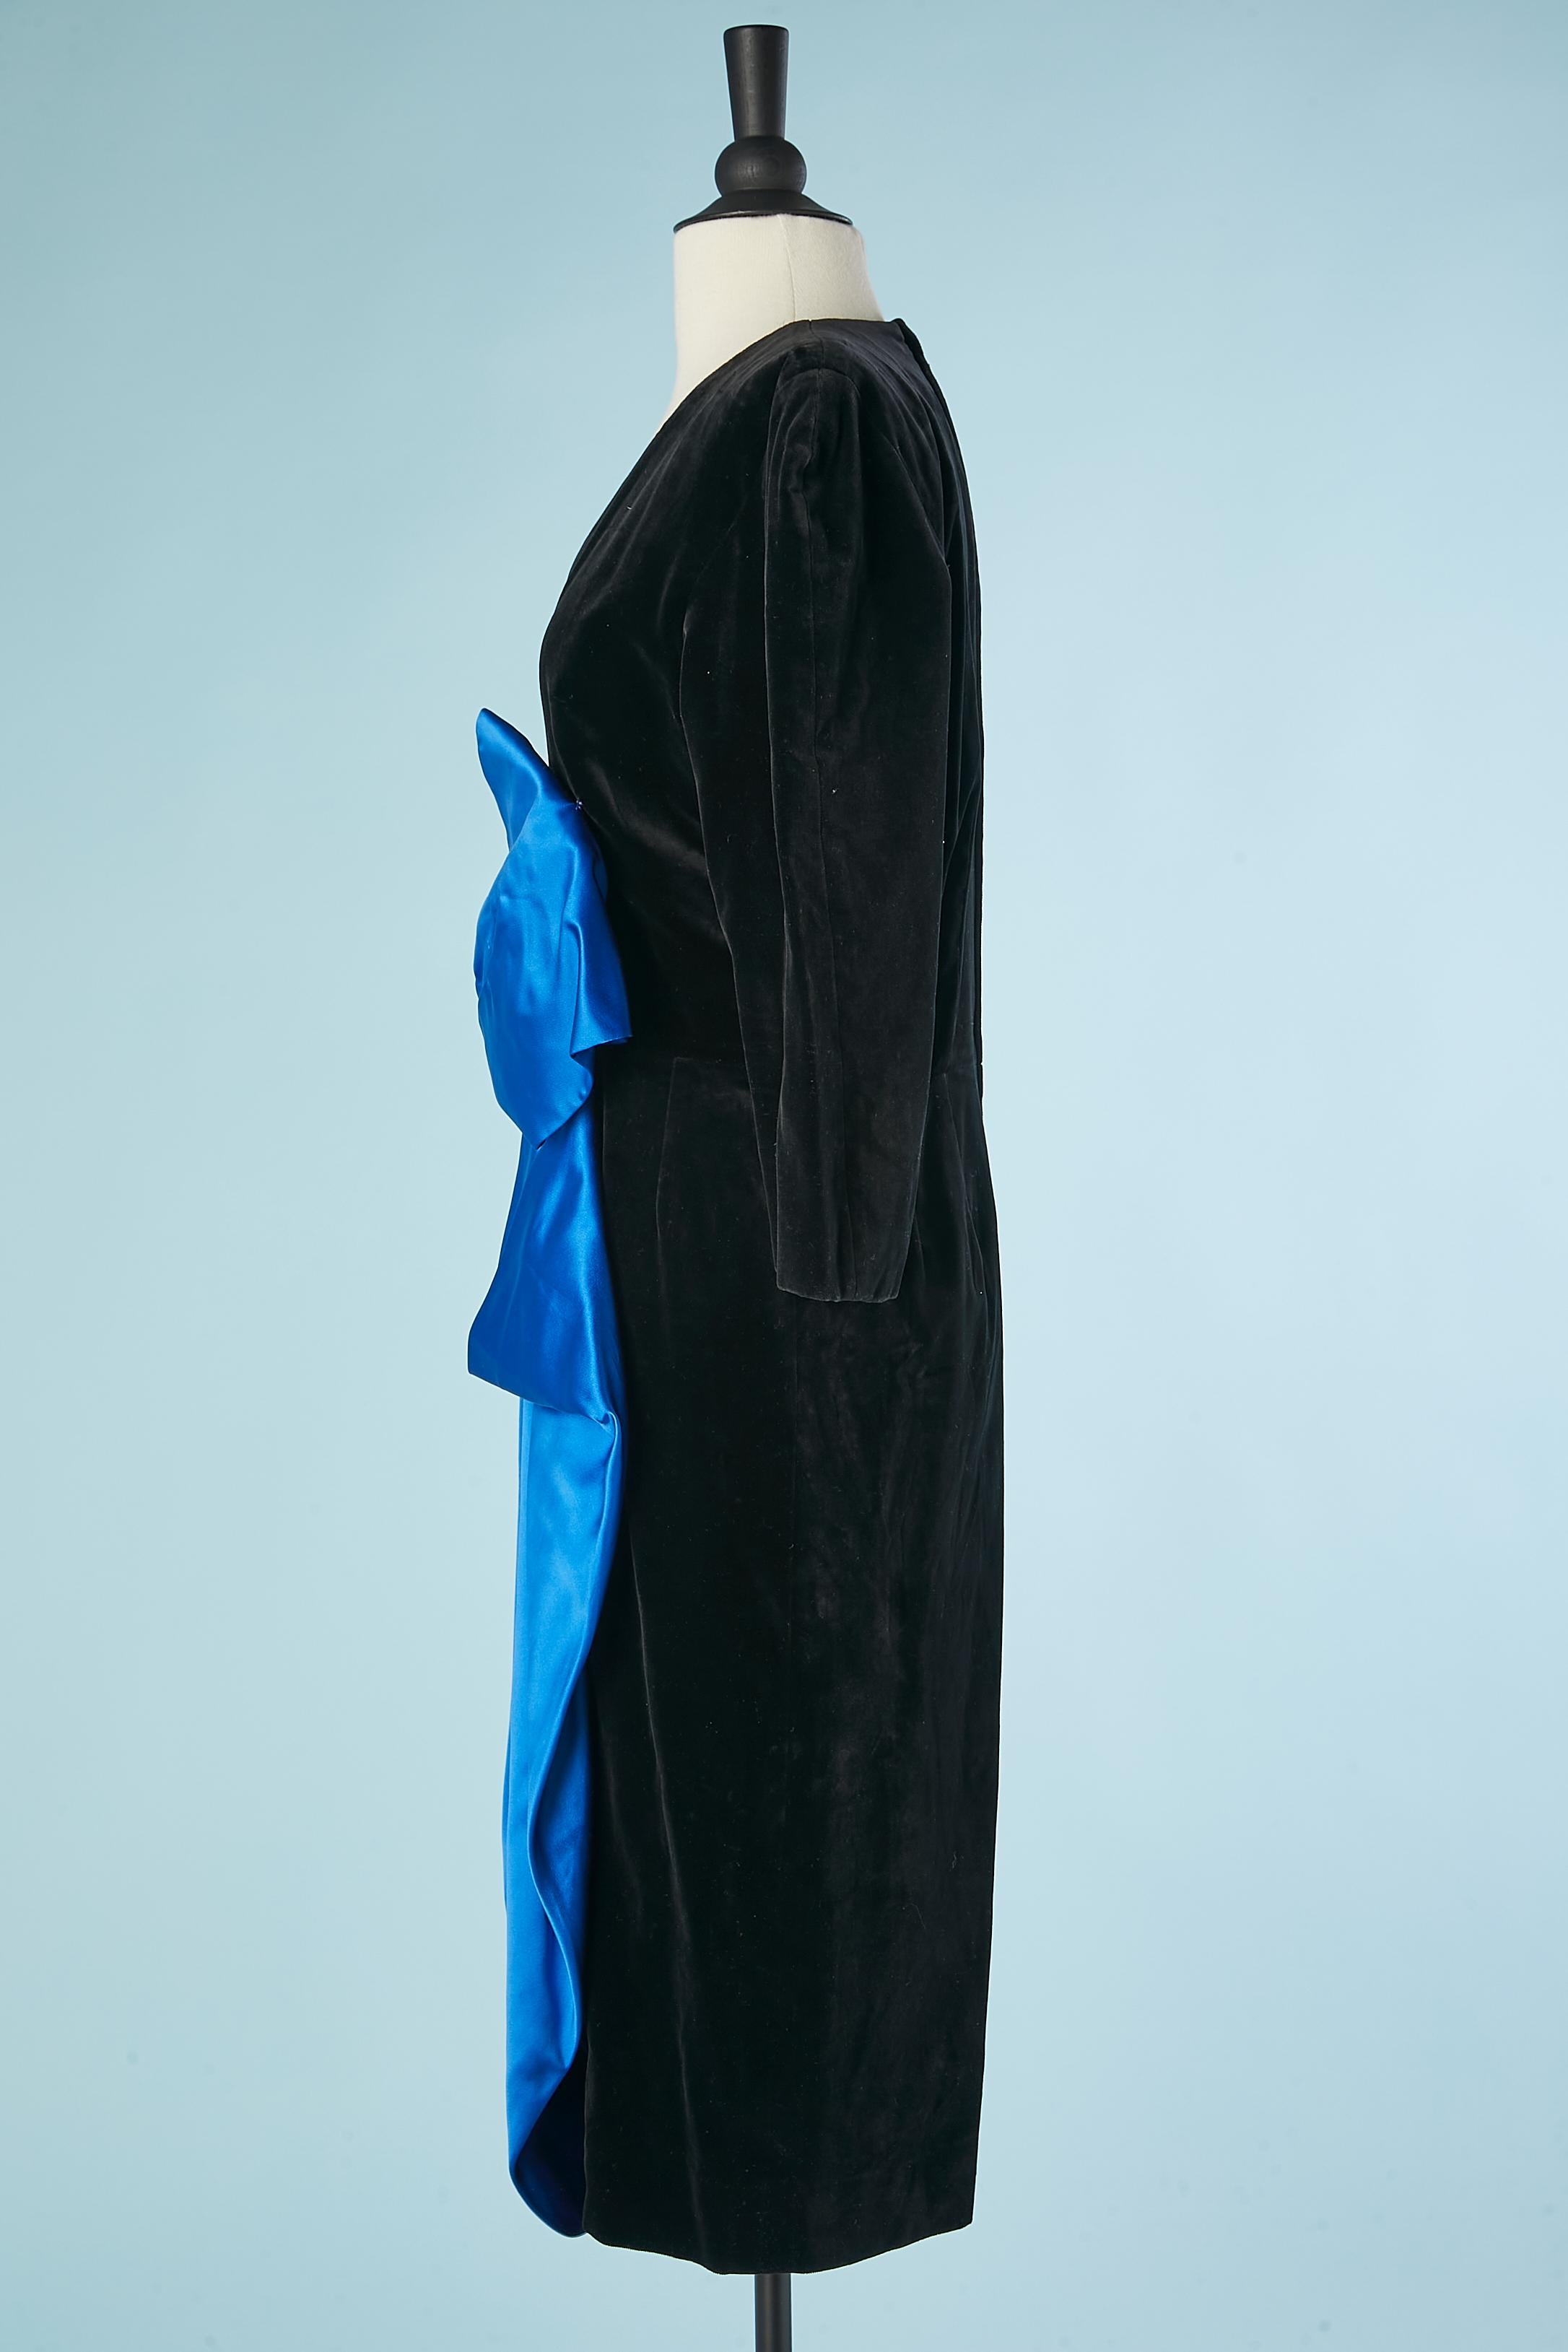 Blue Black velvet cocktail dress with blue satin bow draped Guy Laroche Boutique  For Sale